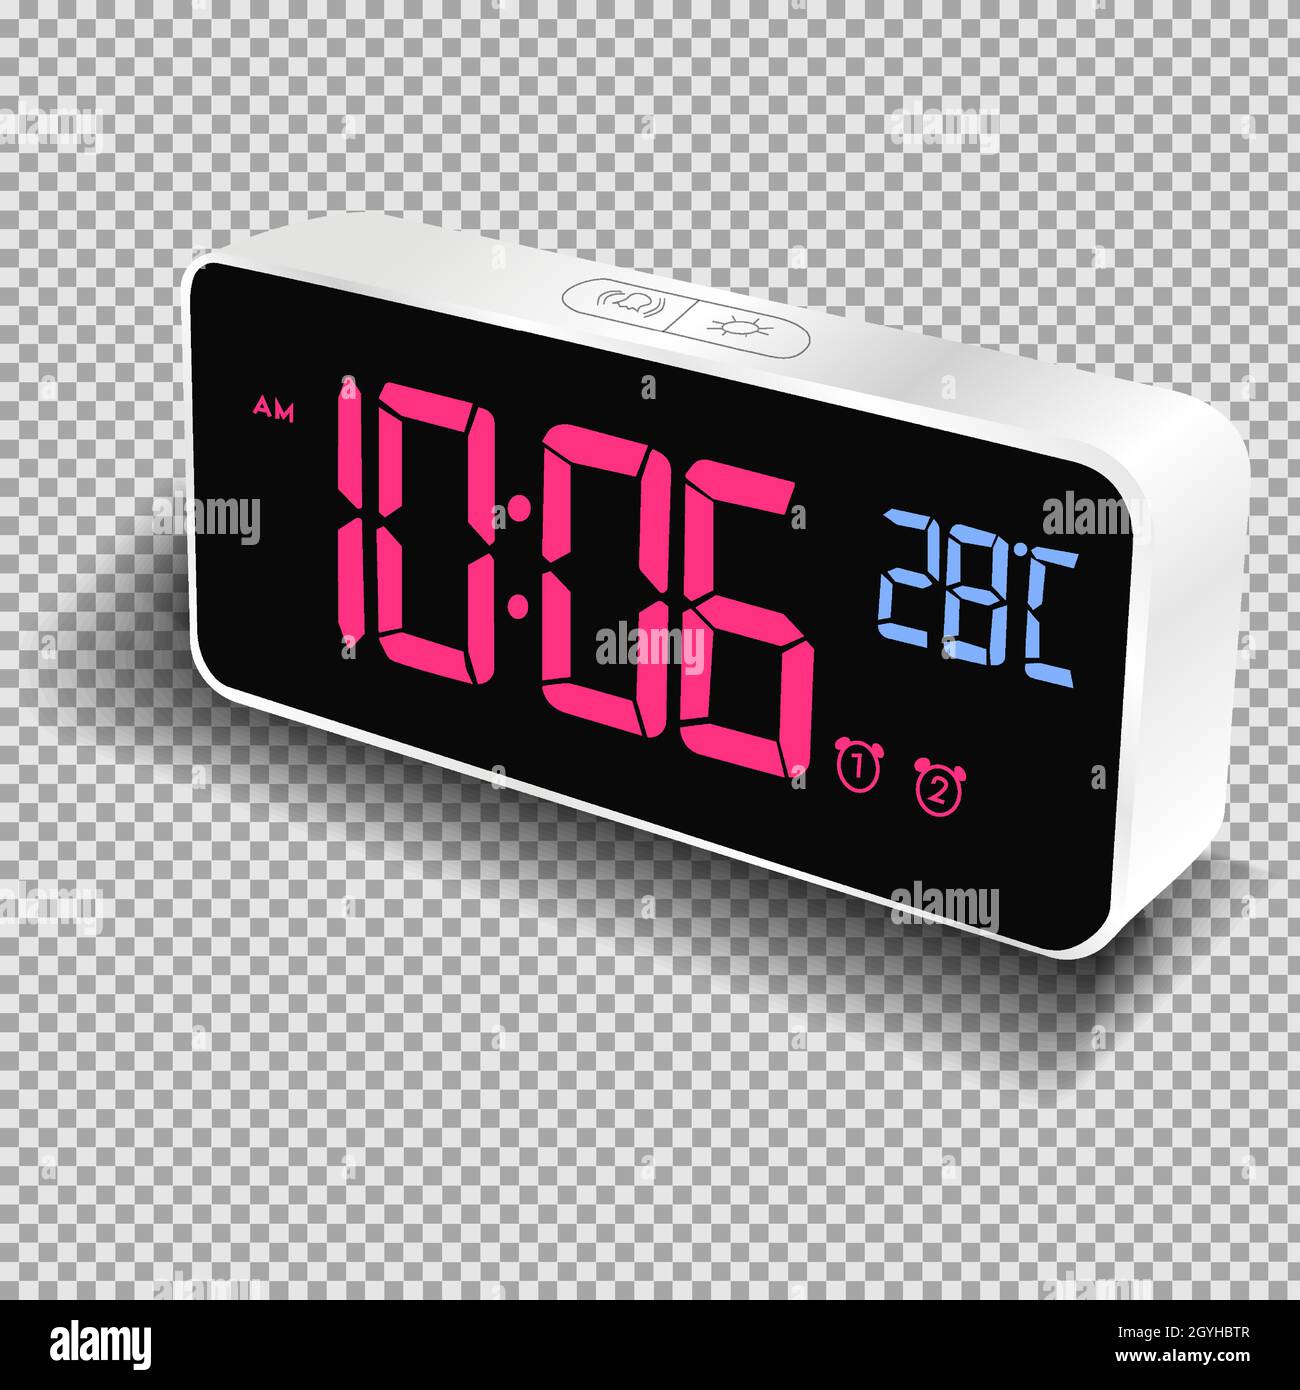 Digital alarm clock 0 hi-res stock photography and images - Alamy